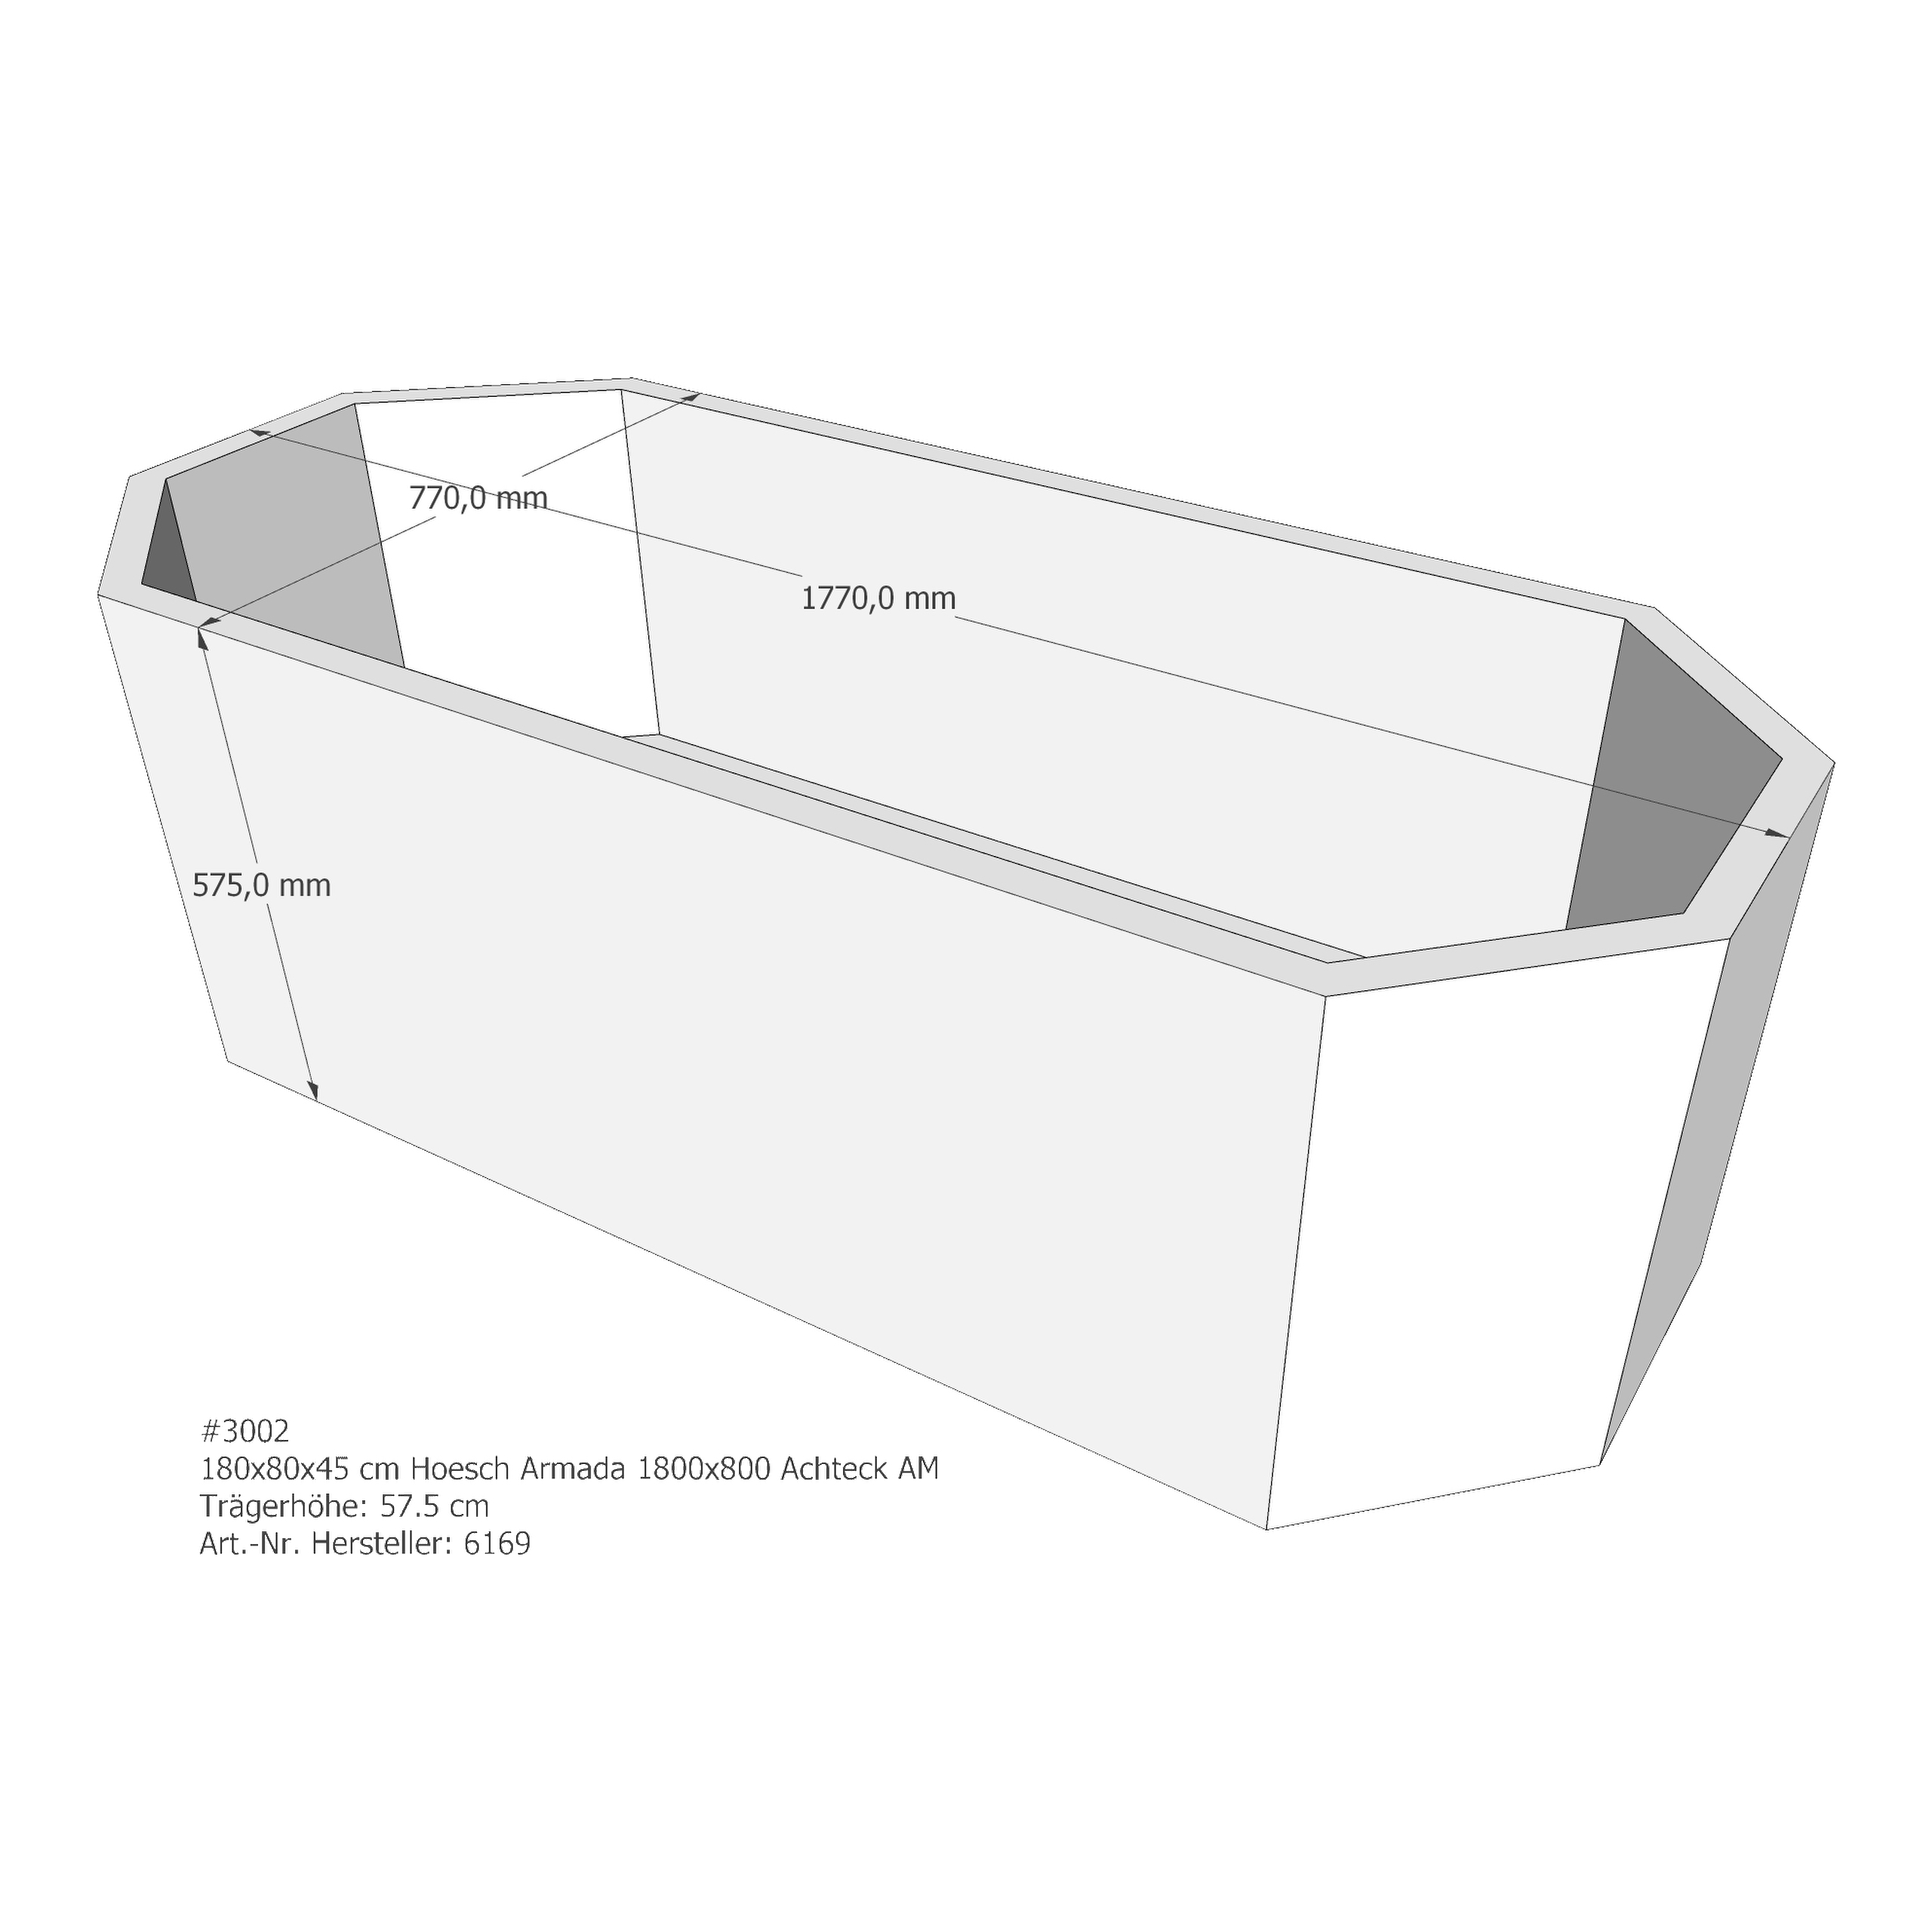 Badewannenträger für Hoesch Armada 1800x800 180 × 80 × 45 cm